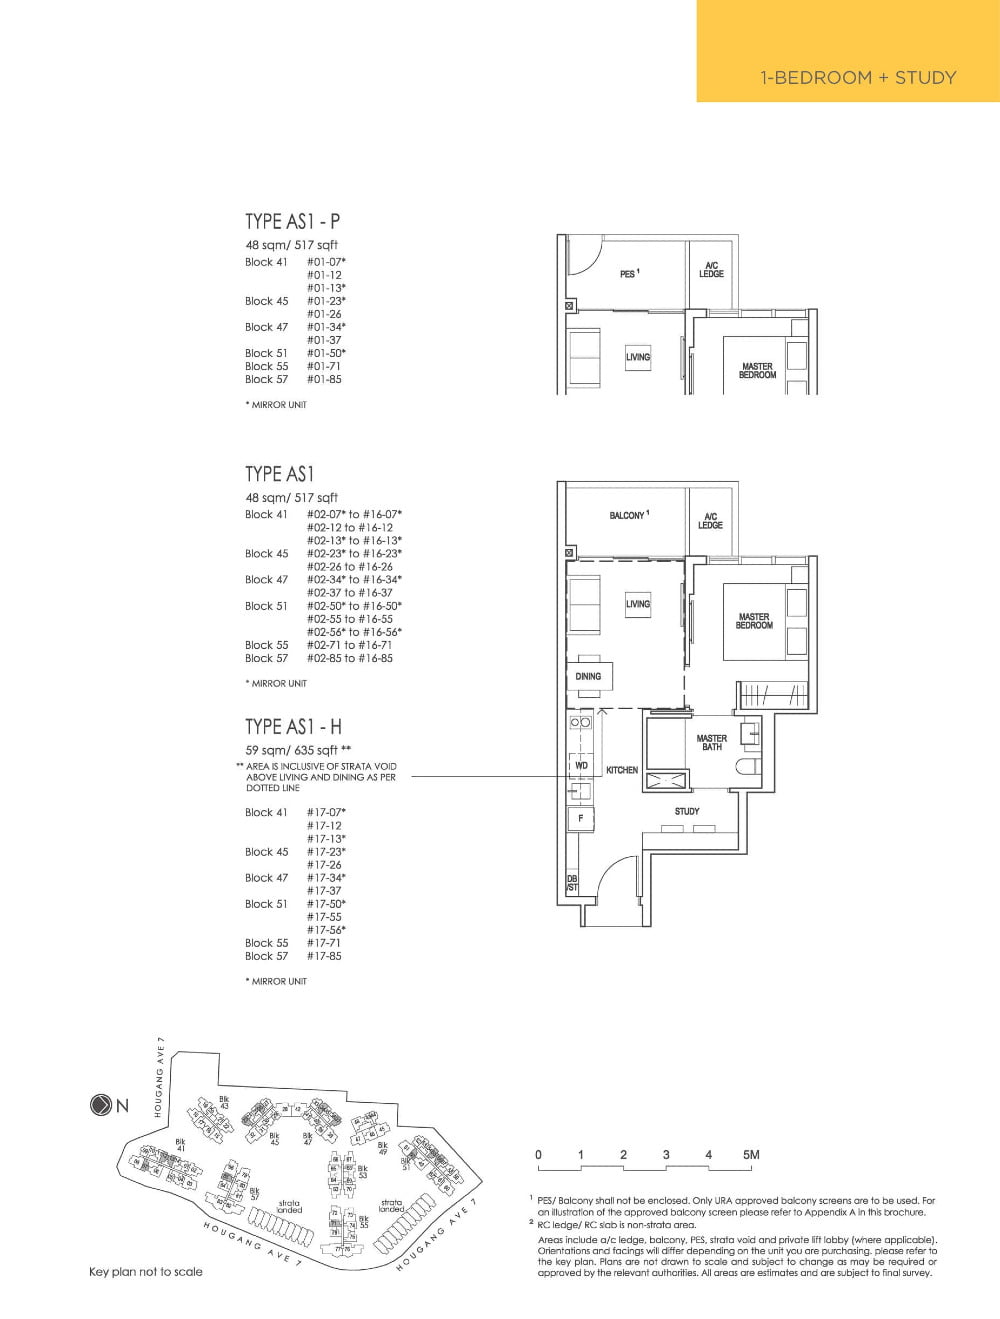 fp-riverfront-residences-as1-floor-plan.jpg